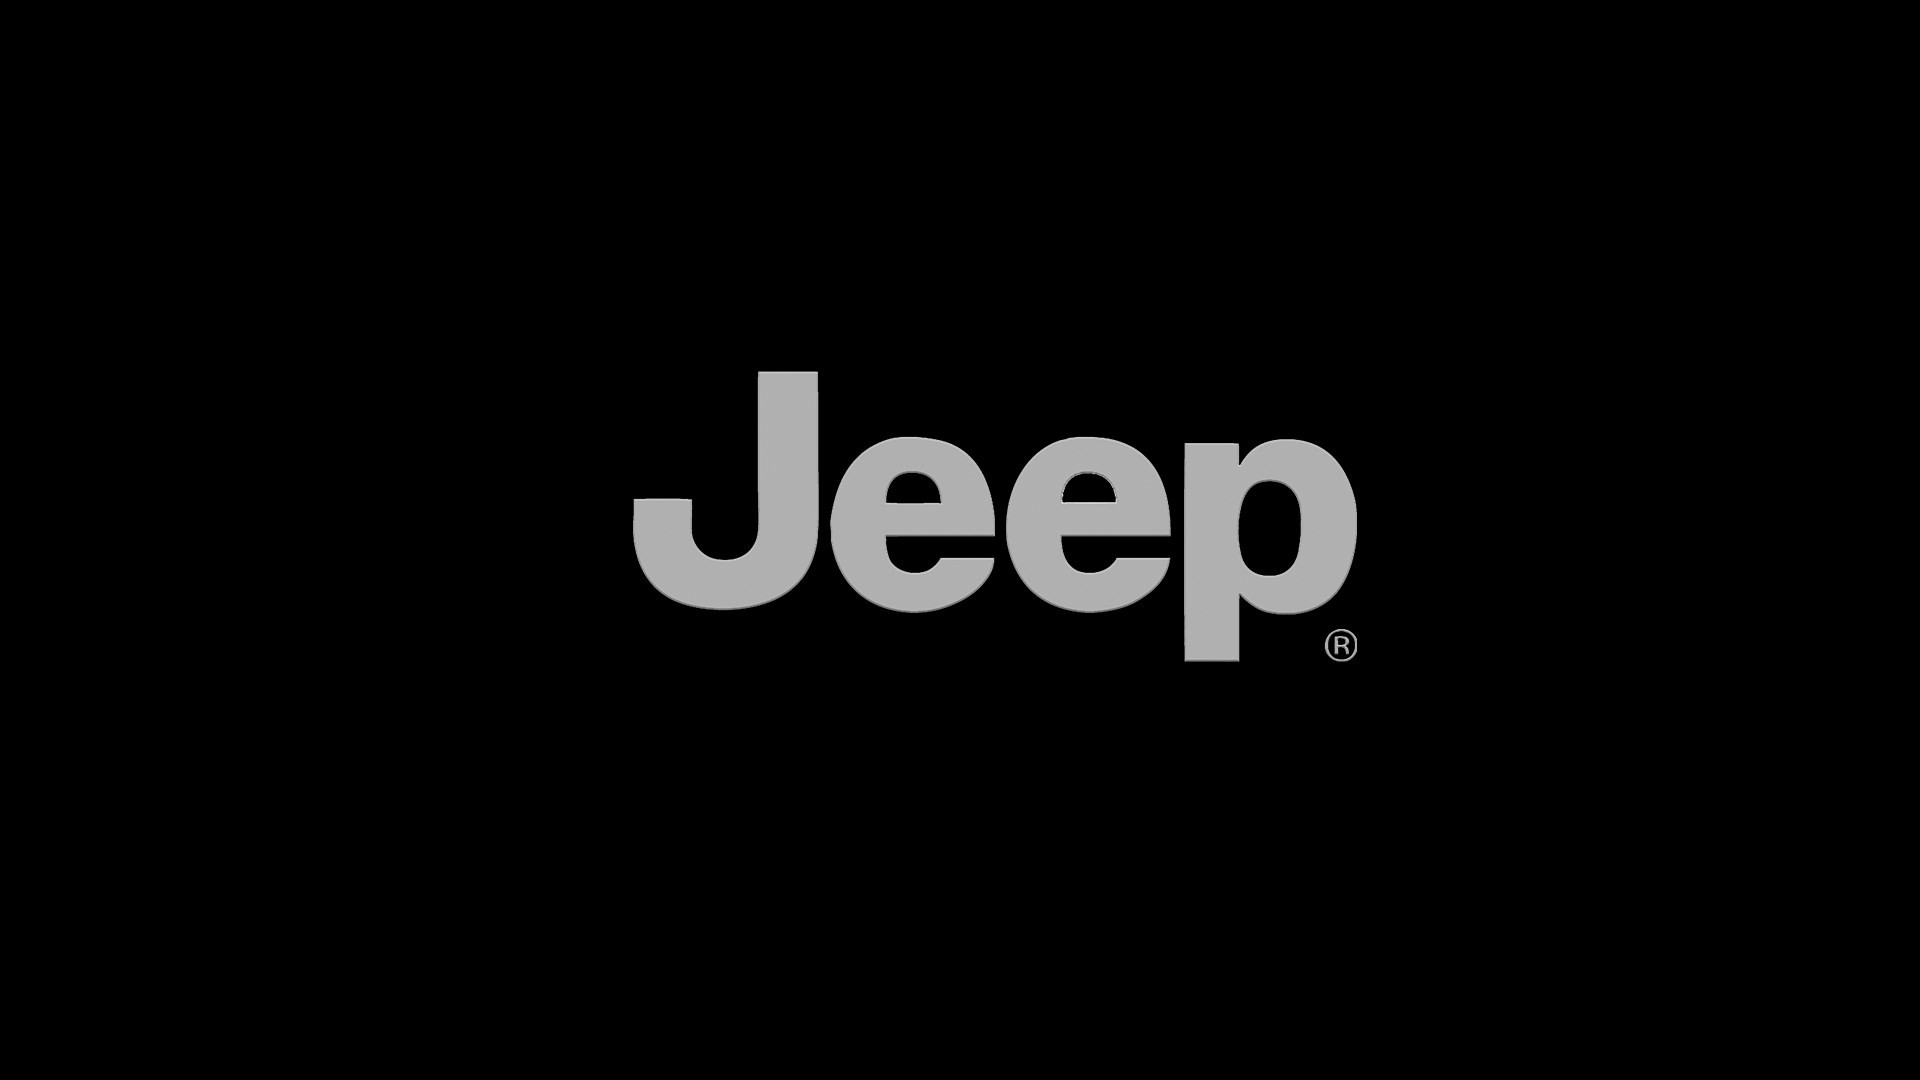  Jeep  Logo  Wallpaper    WallpaperTag